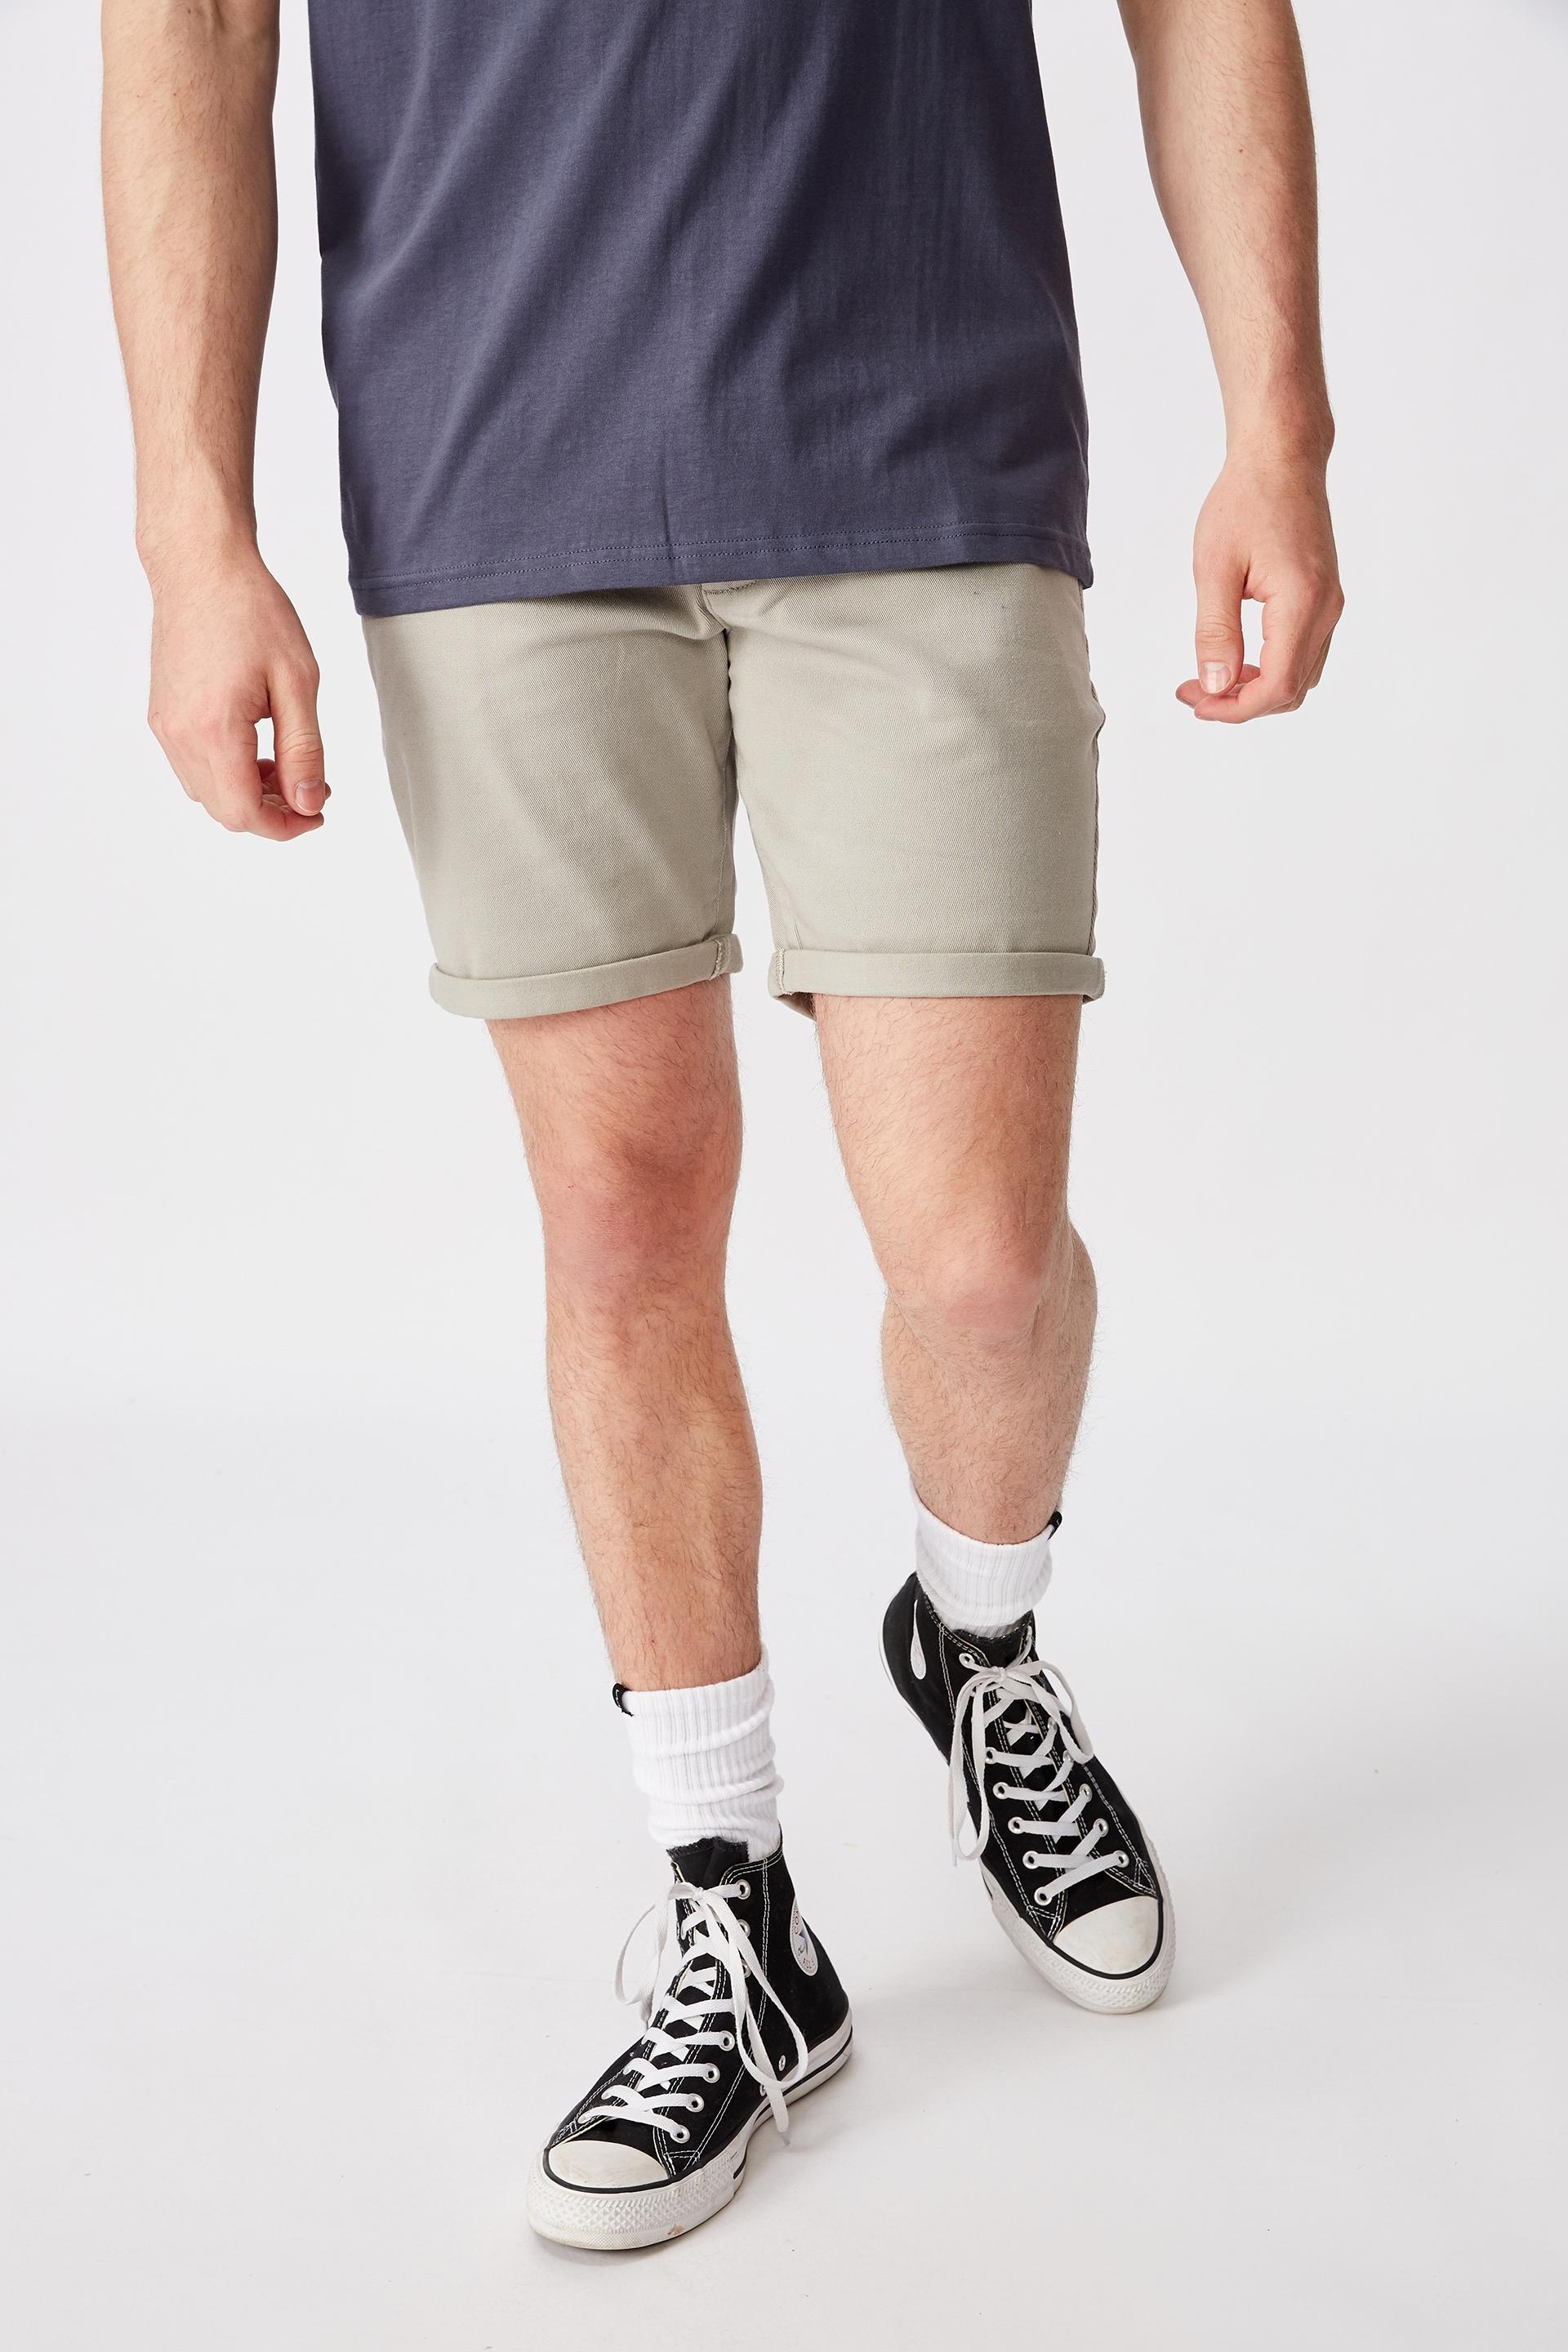 Twill tapered short - grey Factorie Shorts | Superbalist.com